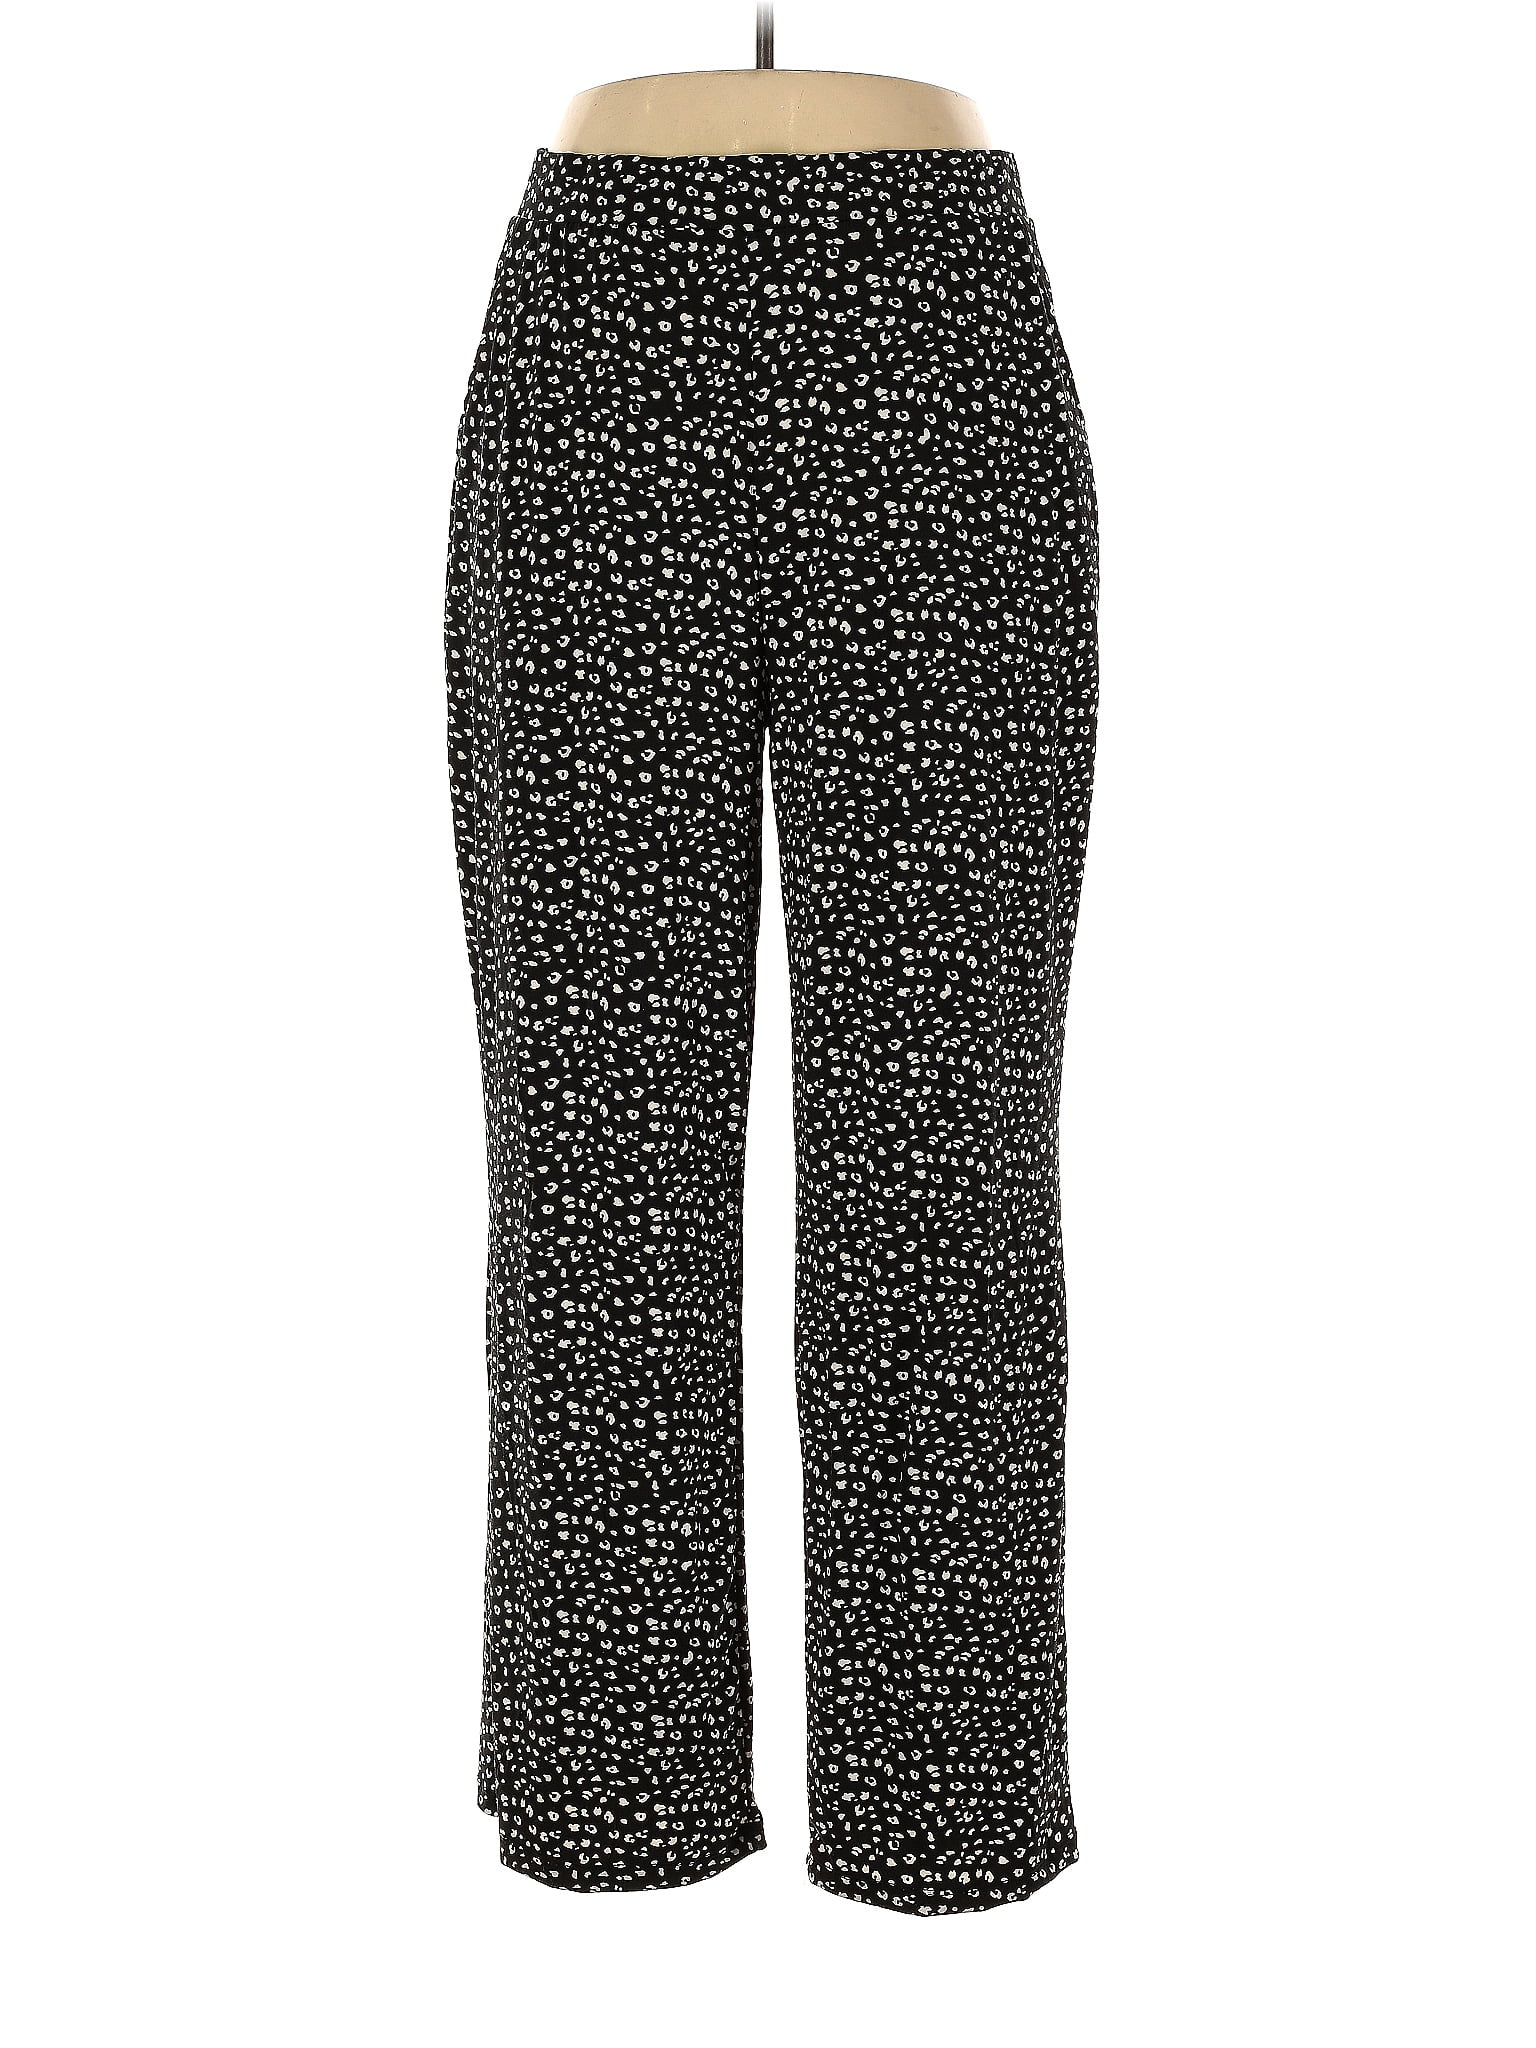 Joan Vass New York Black Casual Pants Size XL - 71% off | thredUP